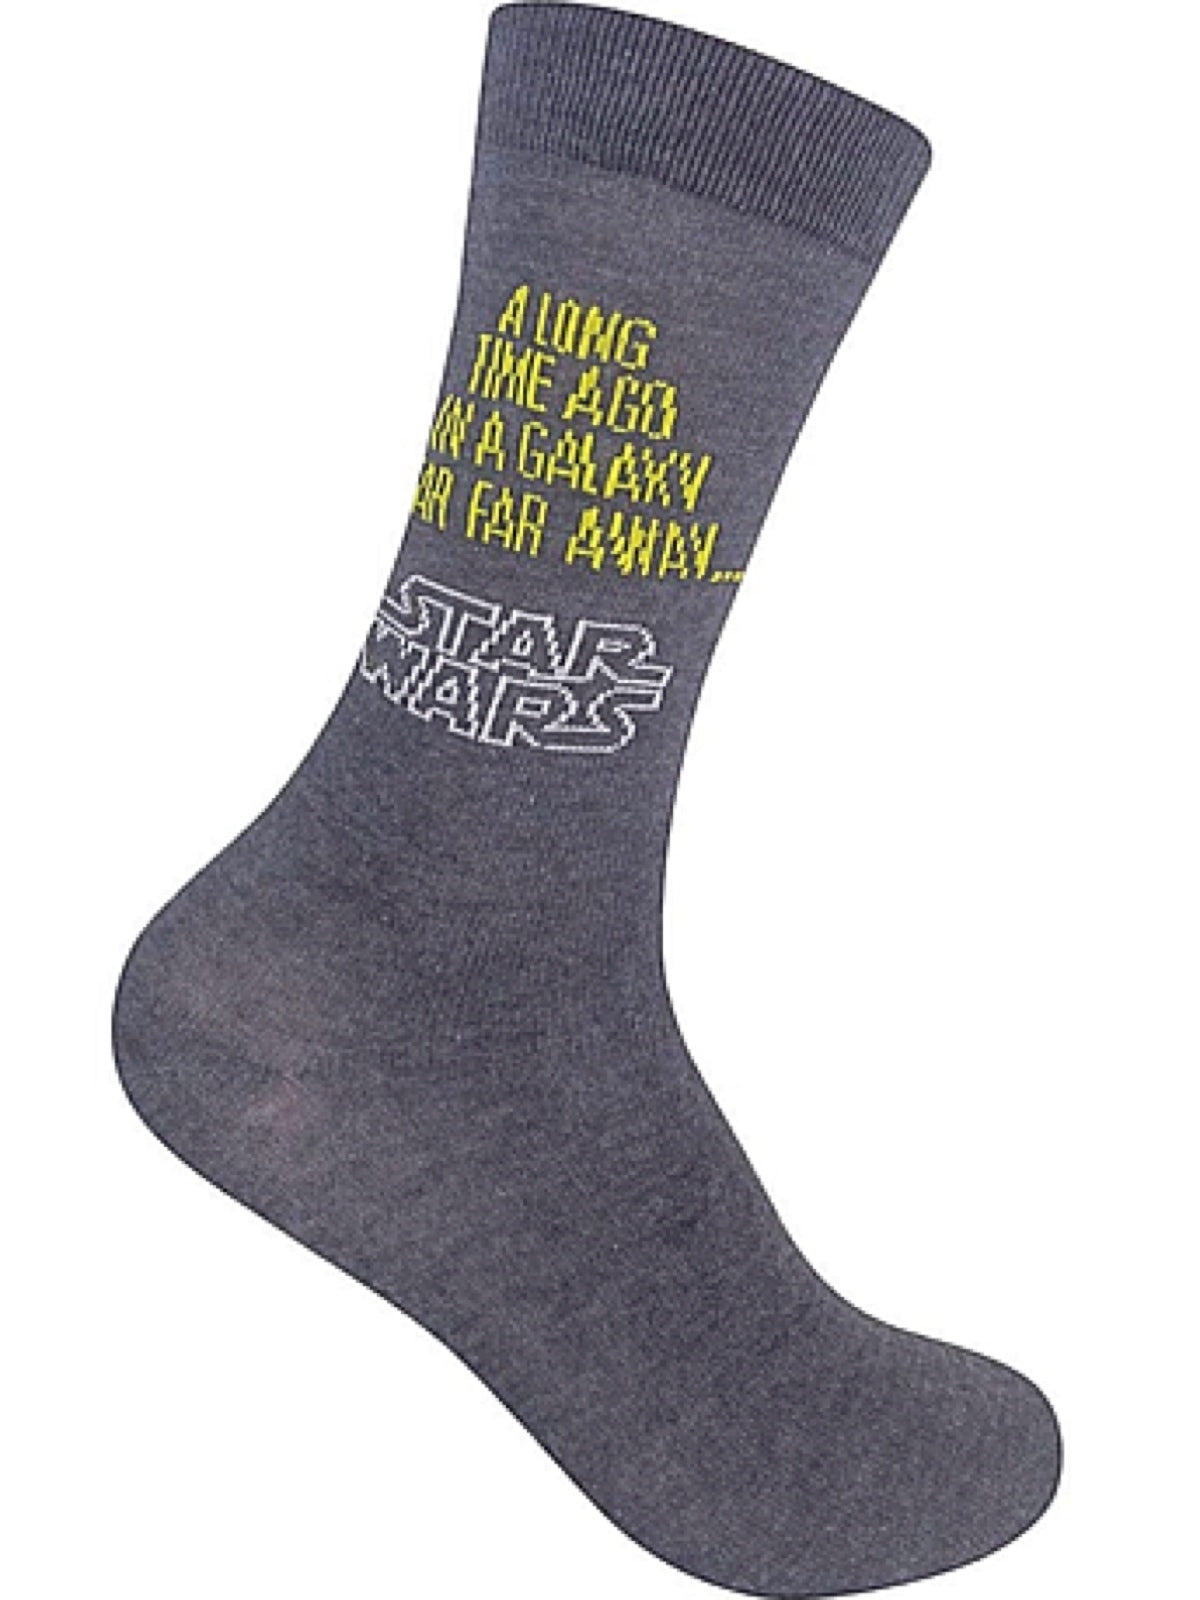 Star Wars Glow in Dark Crew Socks